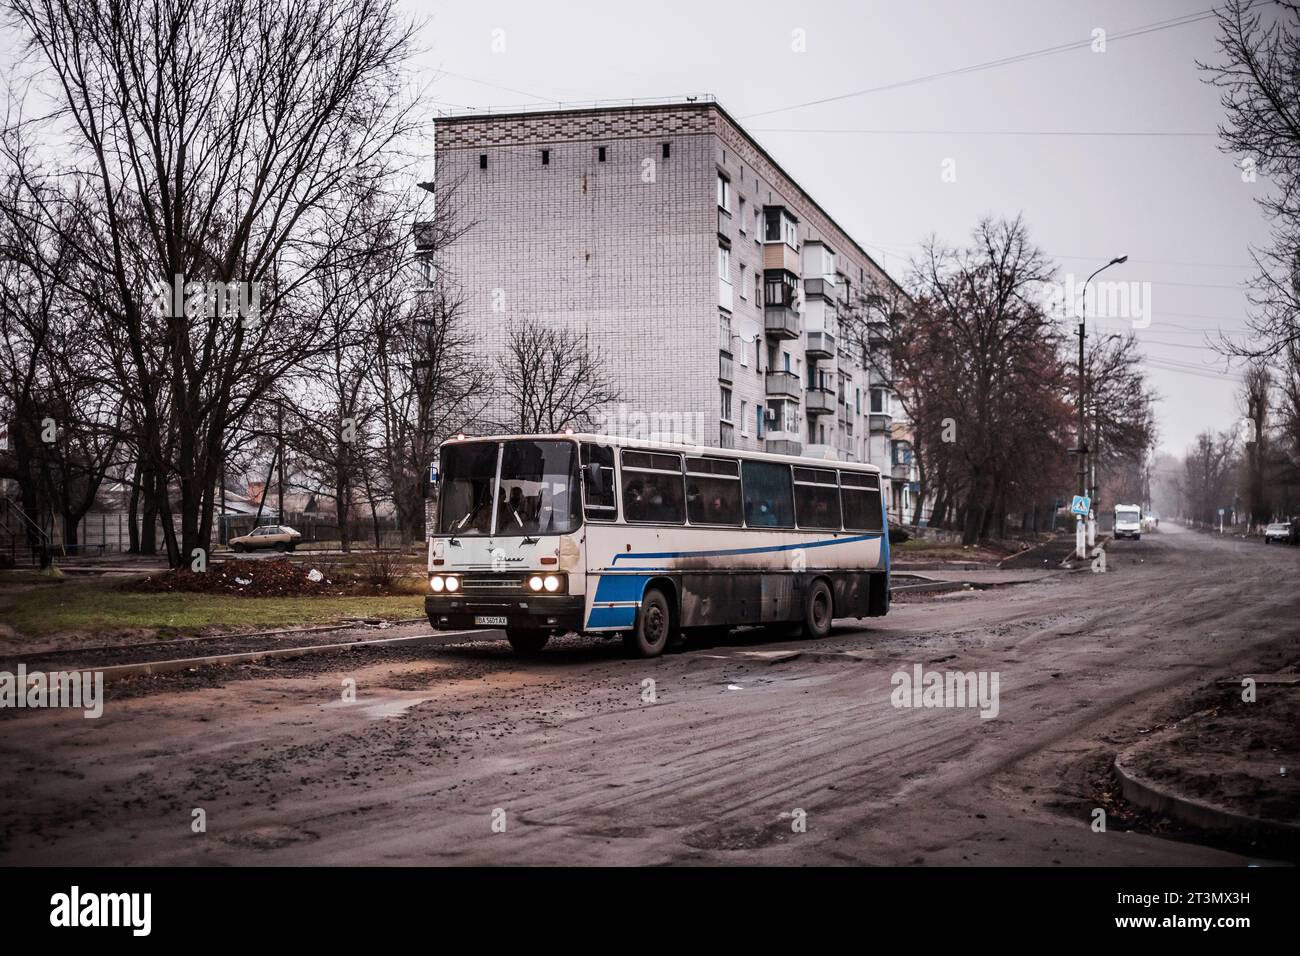 3.01.2021. Ukraine, Vlasivka. Ikarus 256 with workers. Stock Photo